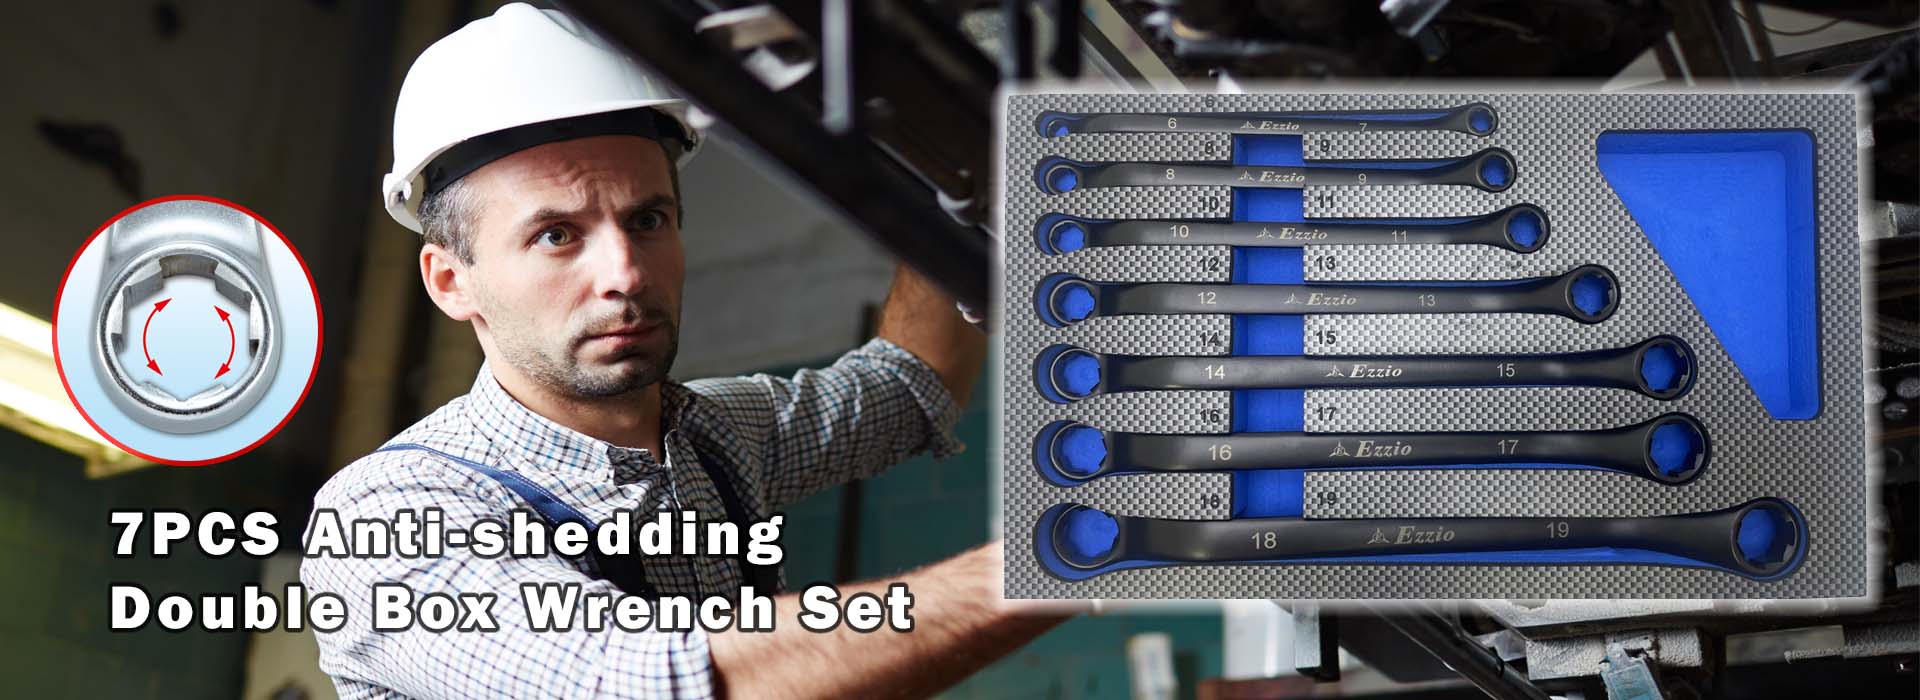 7PCS Anti-shedding Double Box Wrench Set (45°)